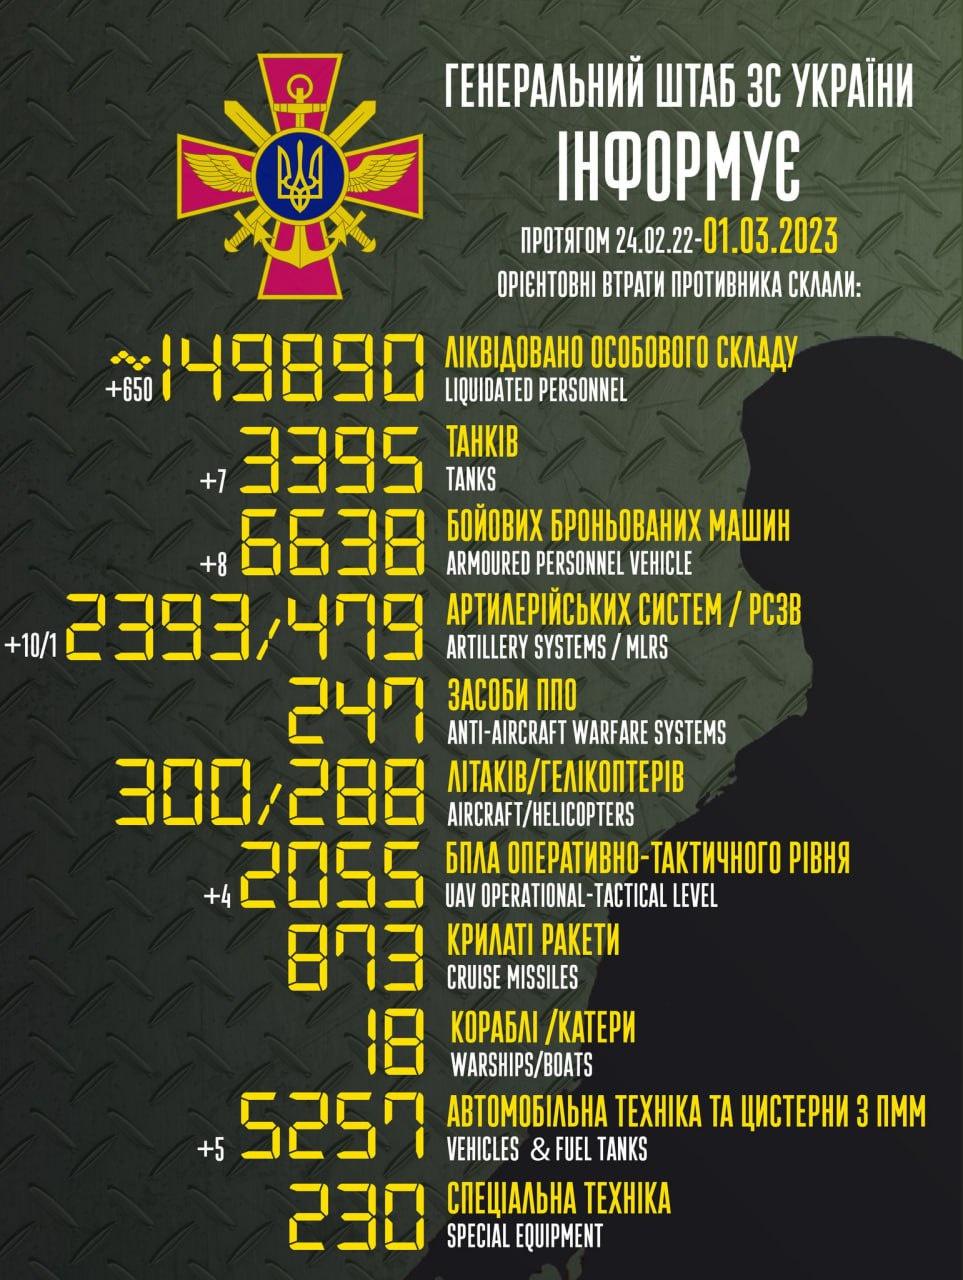 Russia’s losses in Ukraine as of 1/03/2023